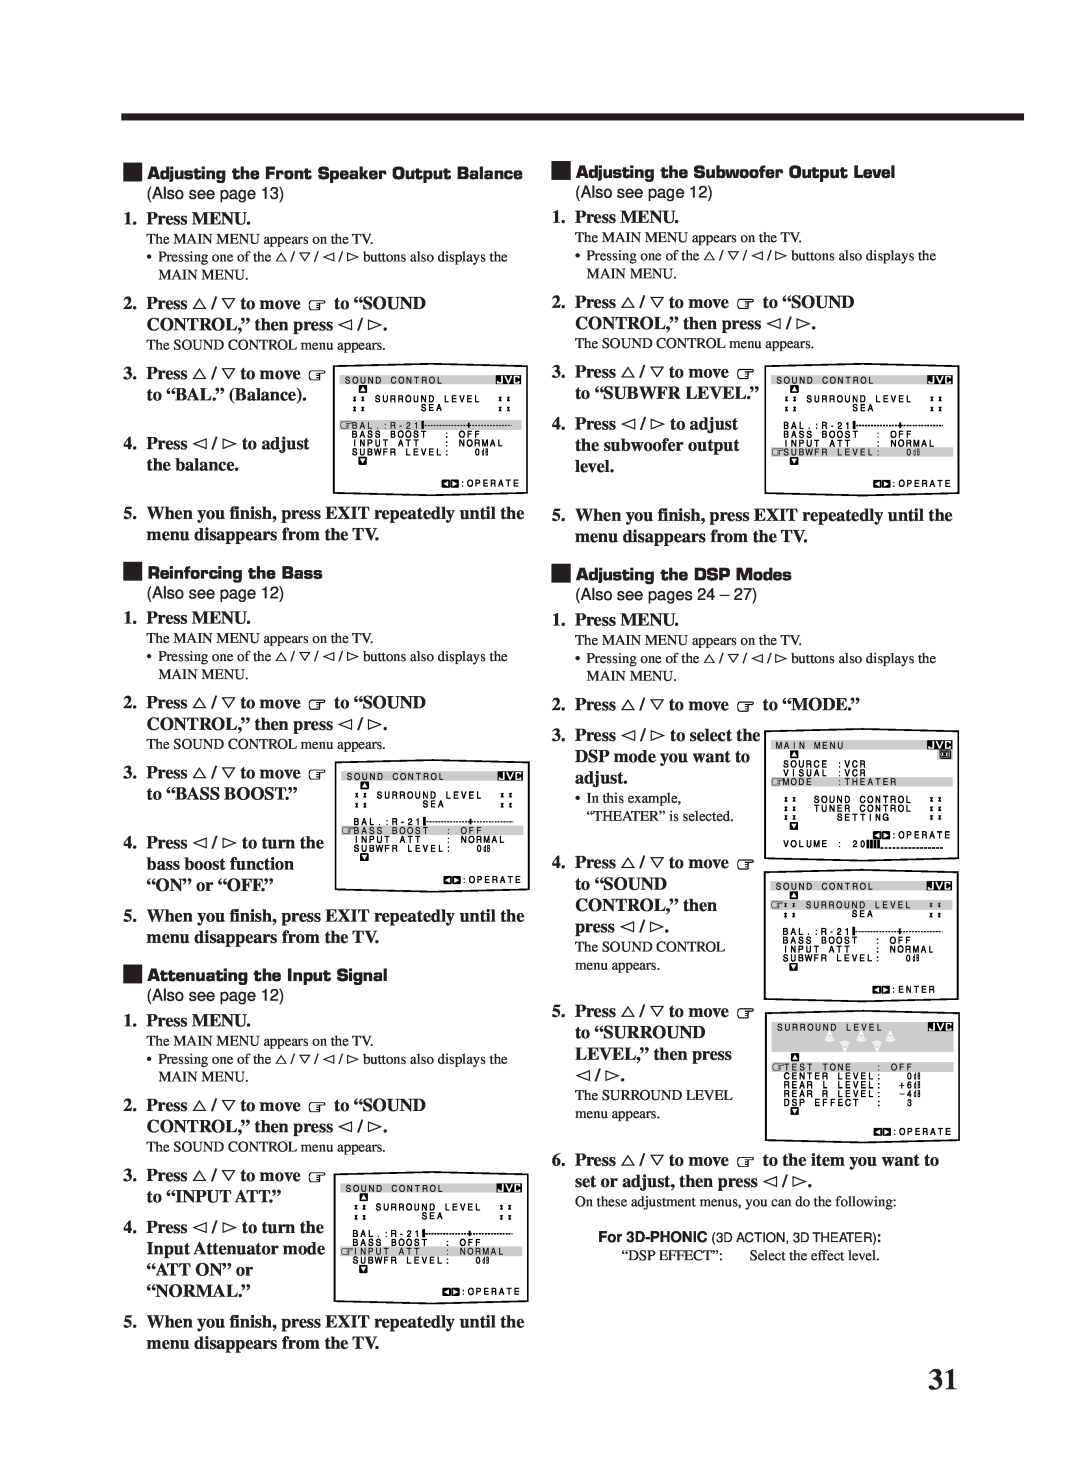 JVC RX-7000VBK manual Press MENU 